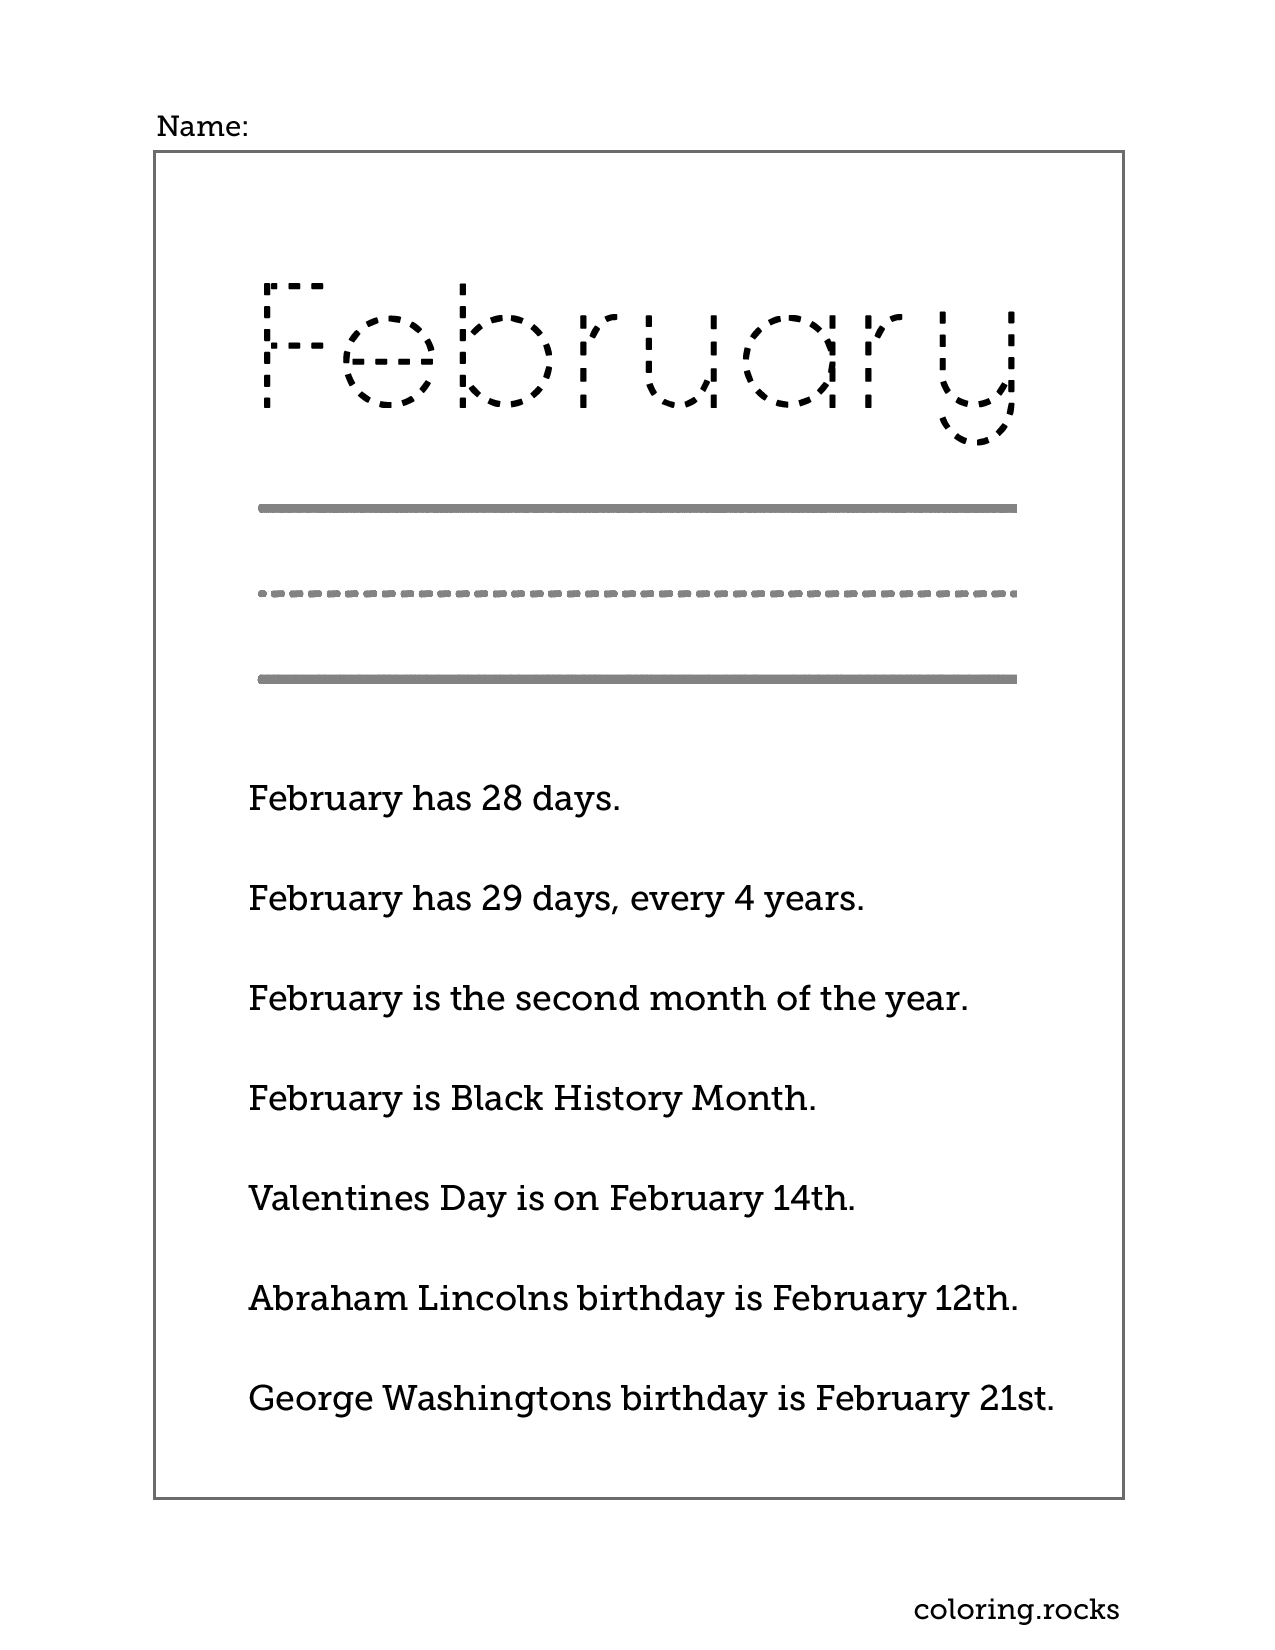 February Worksheet